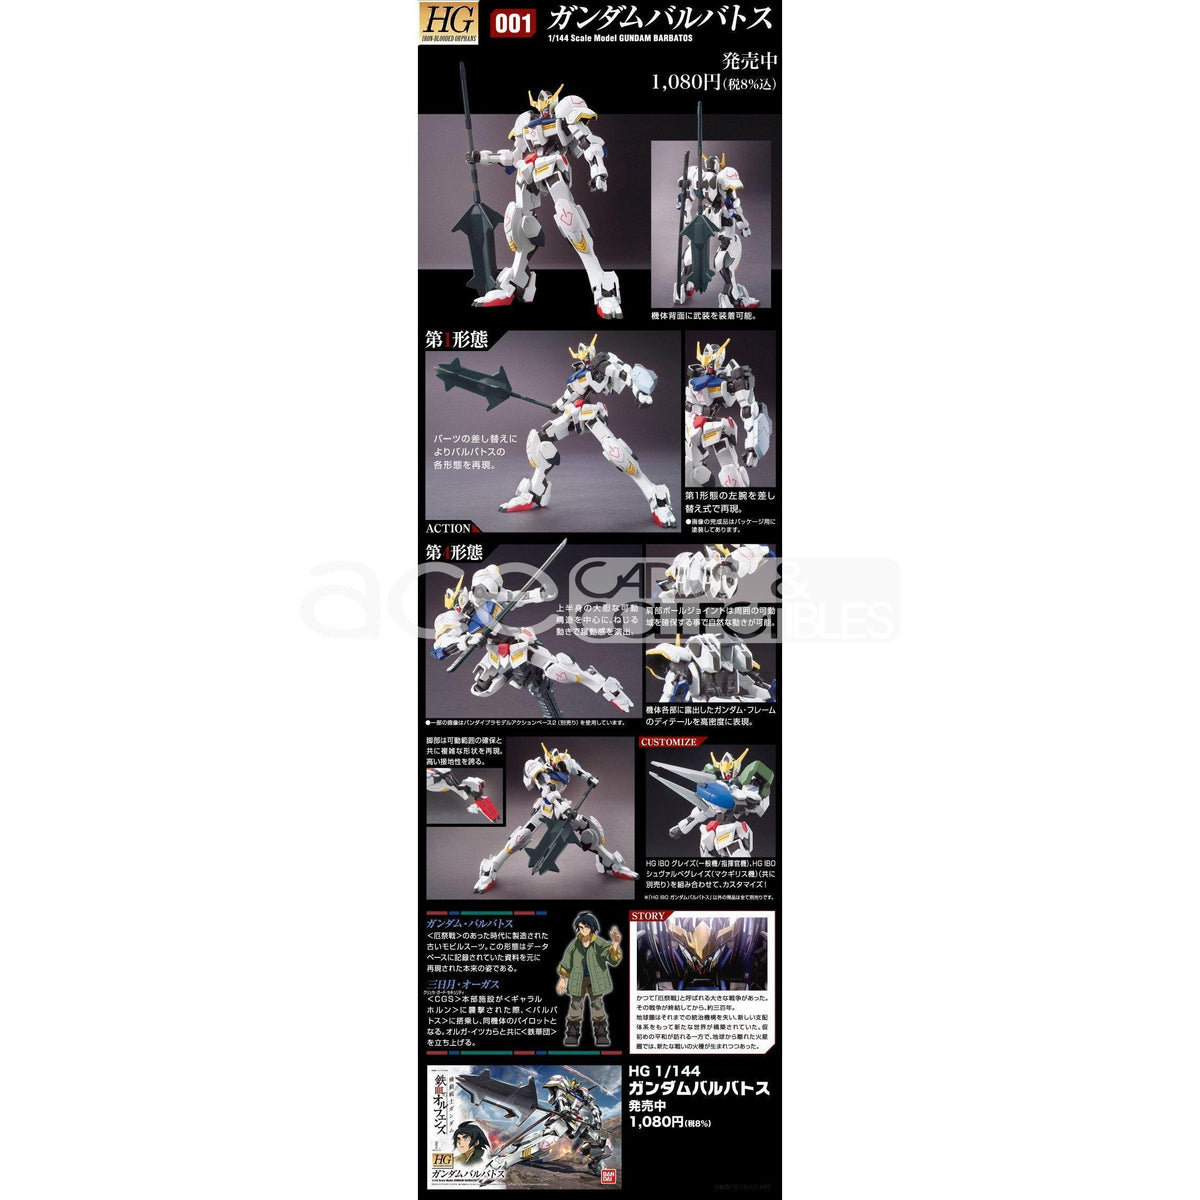 Gunpla HG 1/144 Gundam Barbatos-Bandai-Ace Cards &amp; Collectibles